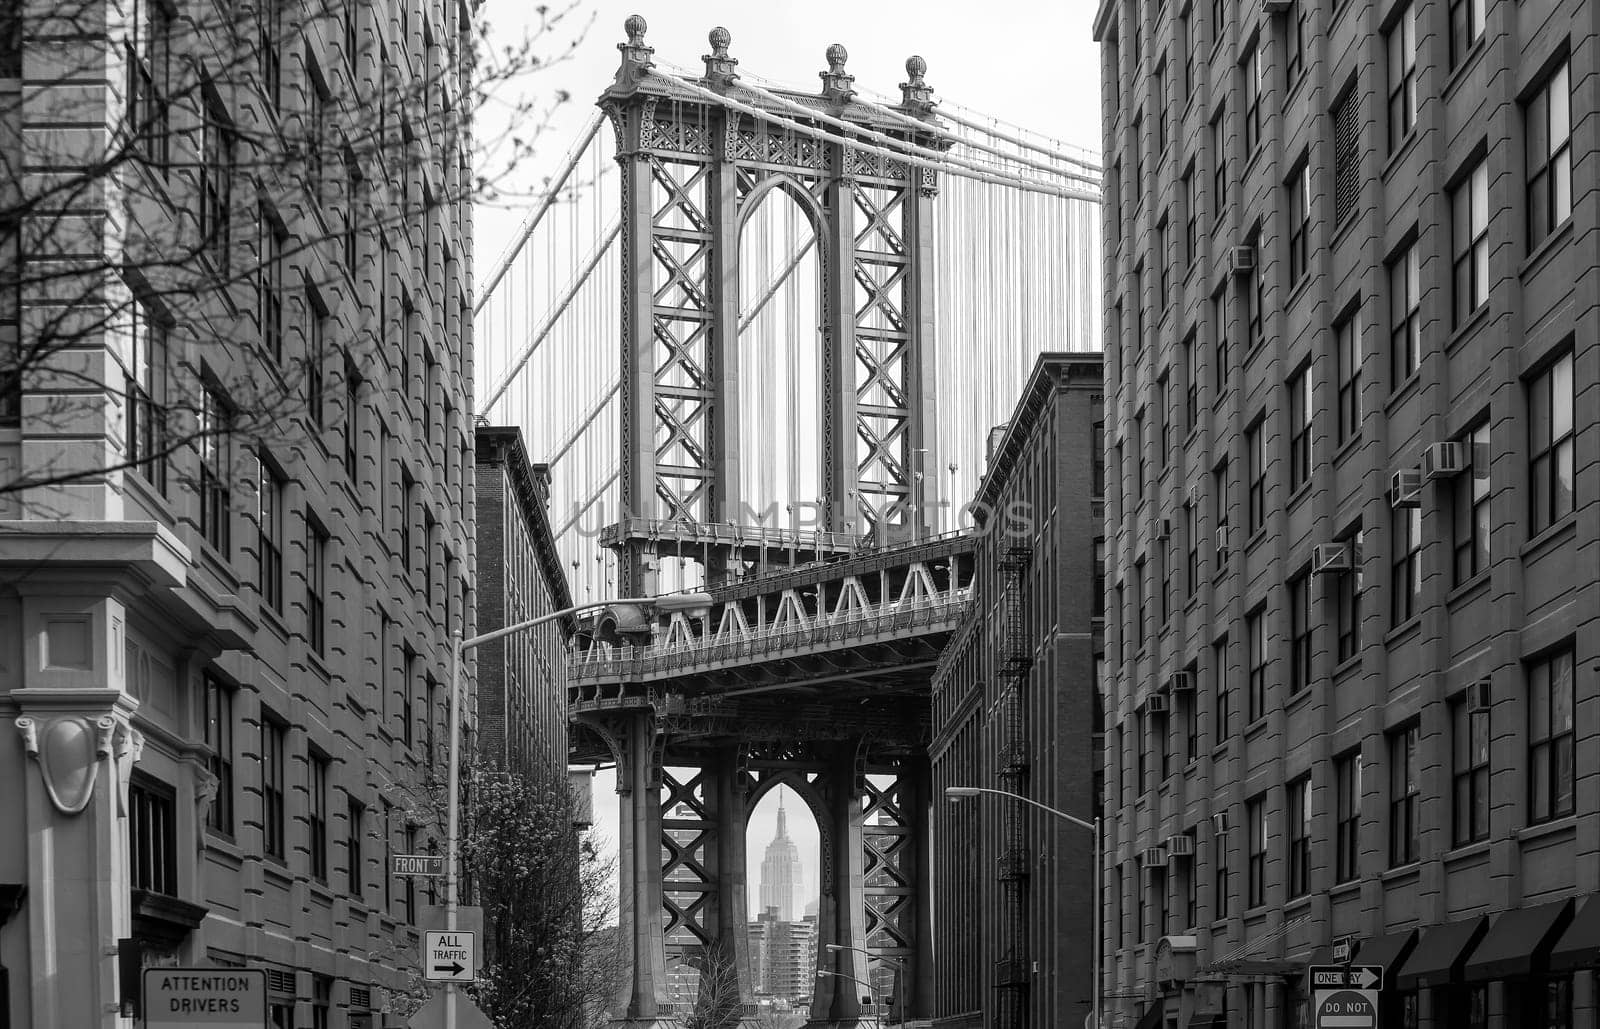  Manhattan Bridge in New York City in USA by f11photo